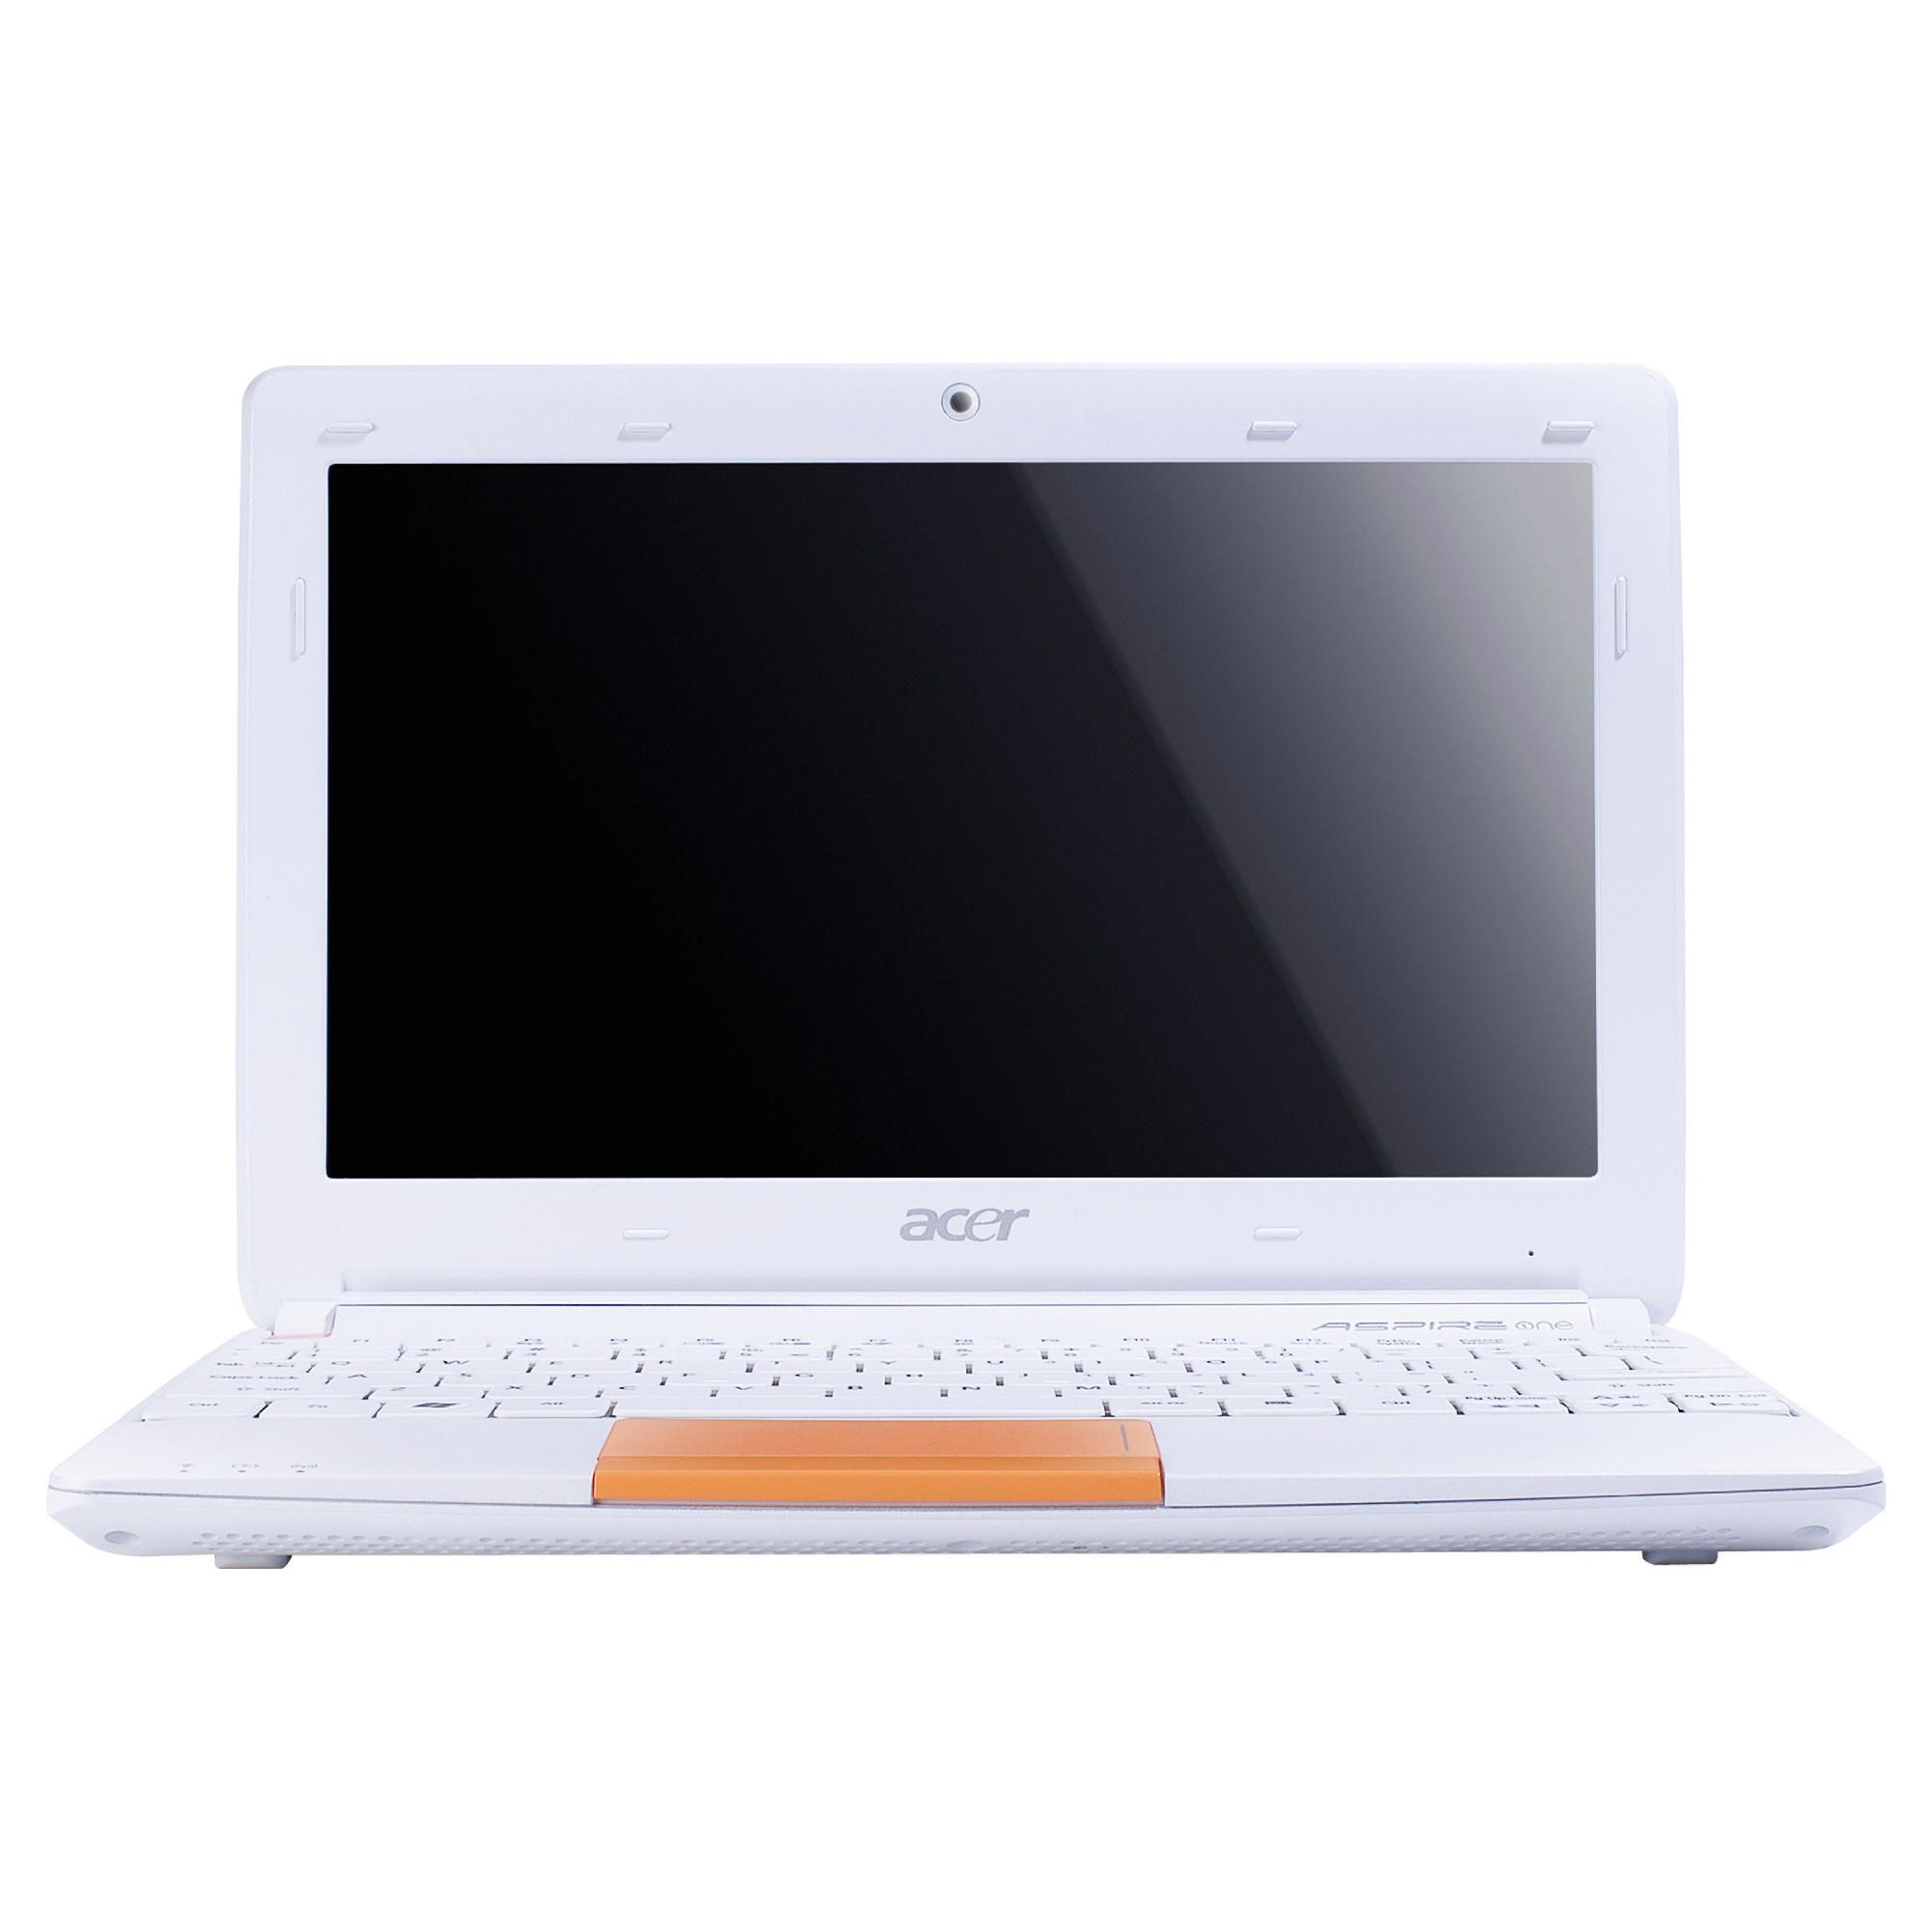 Acer Aspire Happy 2 Netbook (Intel Atom, 1GB, 250GB, 10.1'' Display) Orange at Tesco Direct